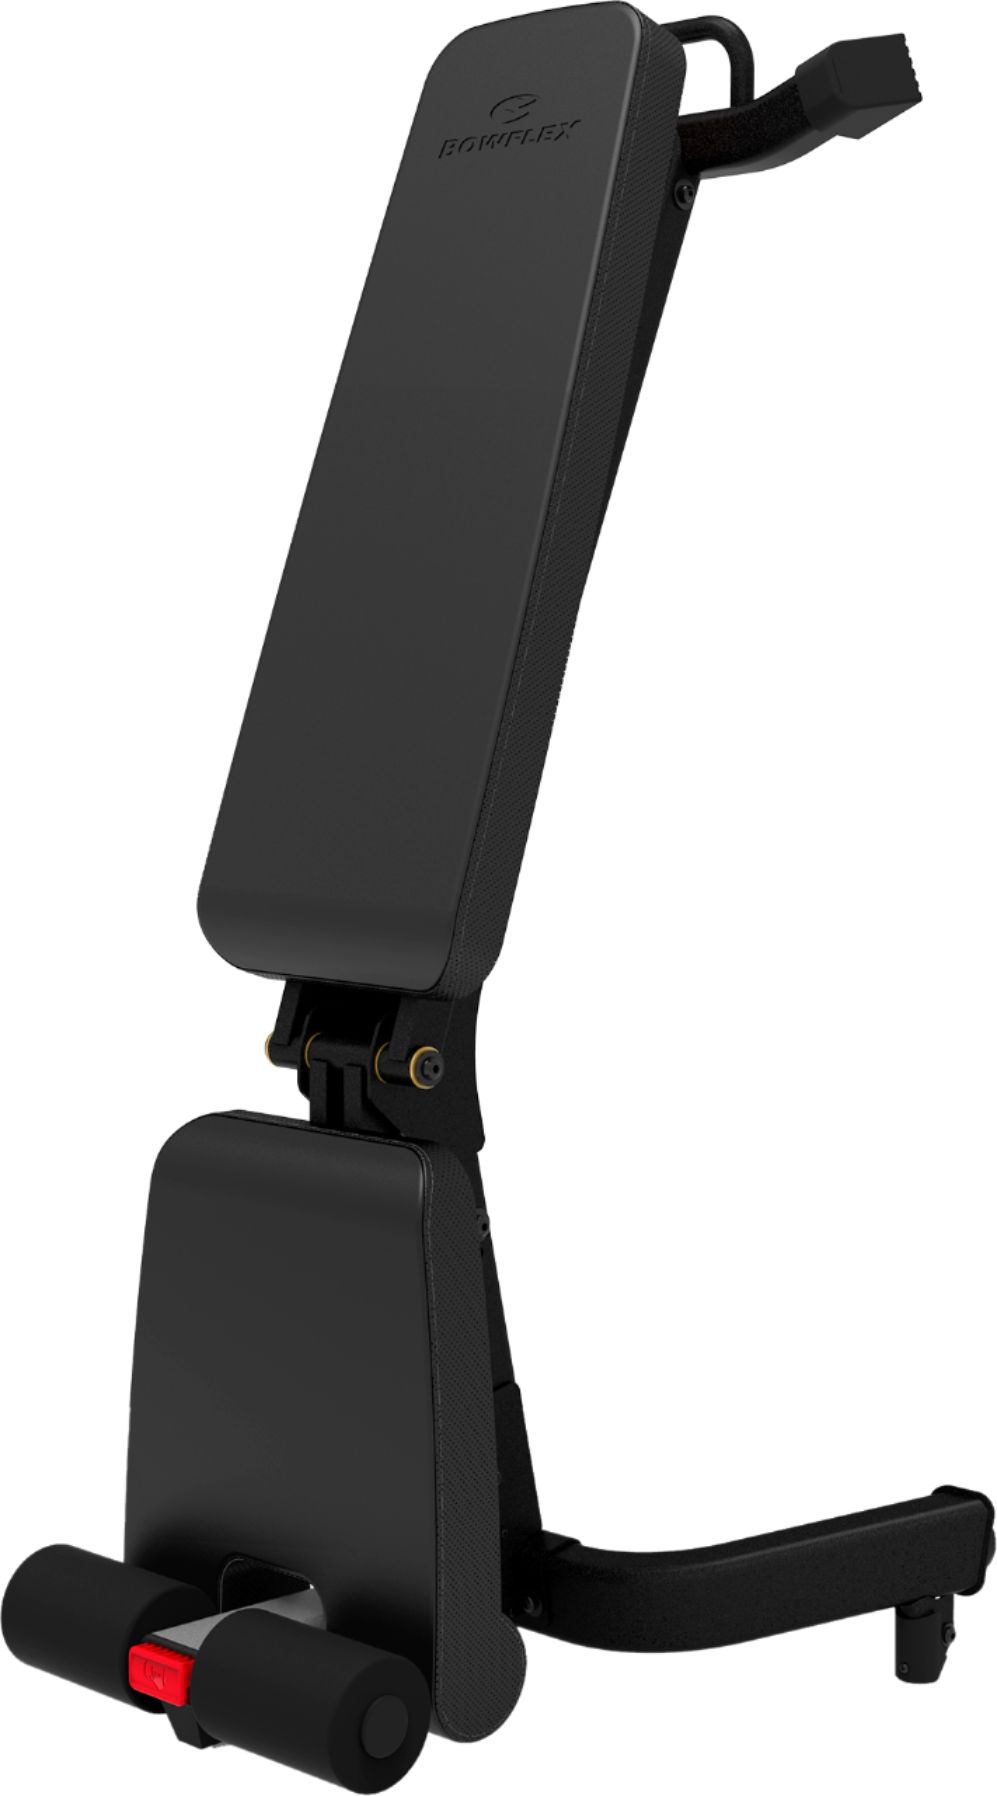 Angle View: Bowflex - SelectTech 1090 Adjustable Dumbbell - Black